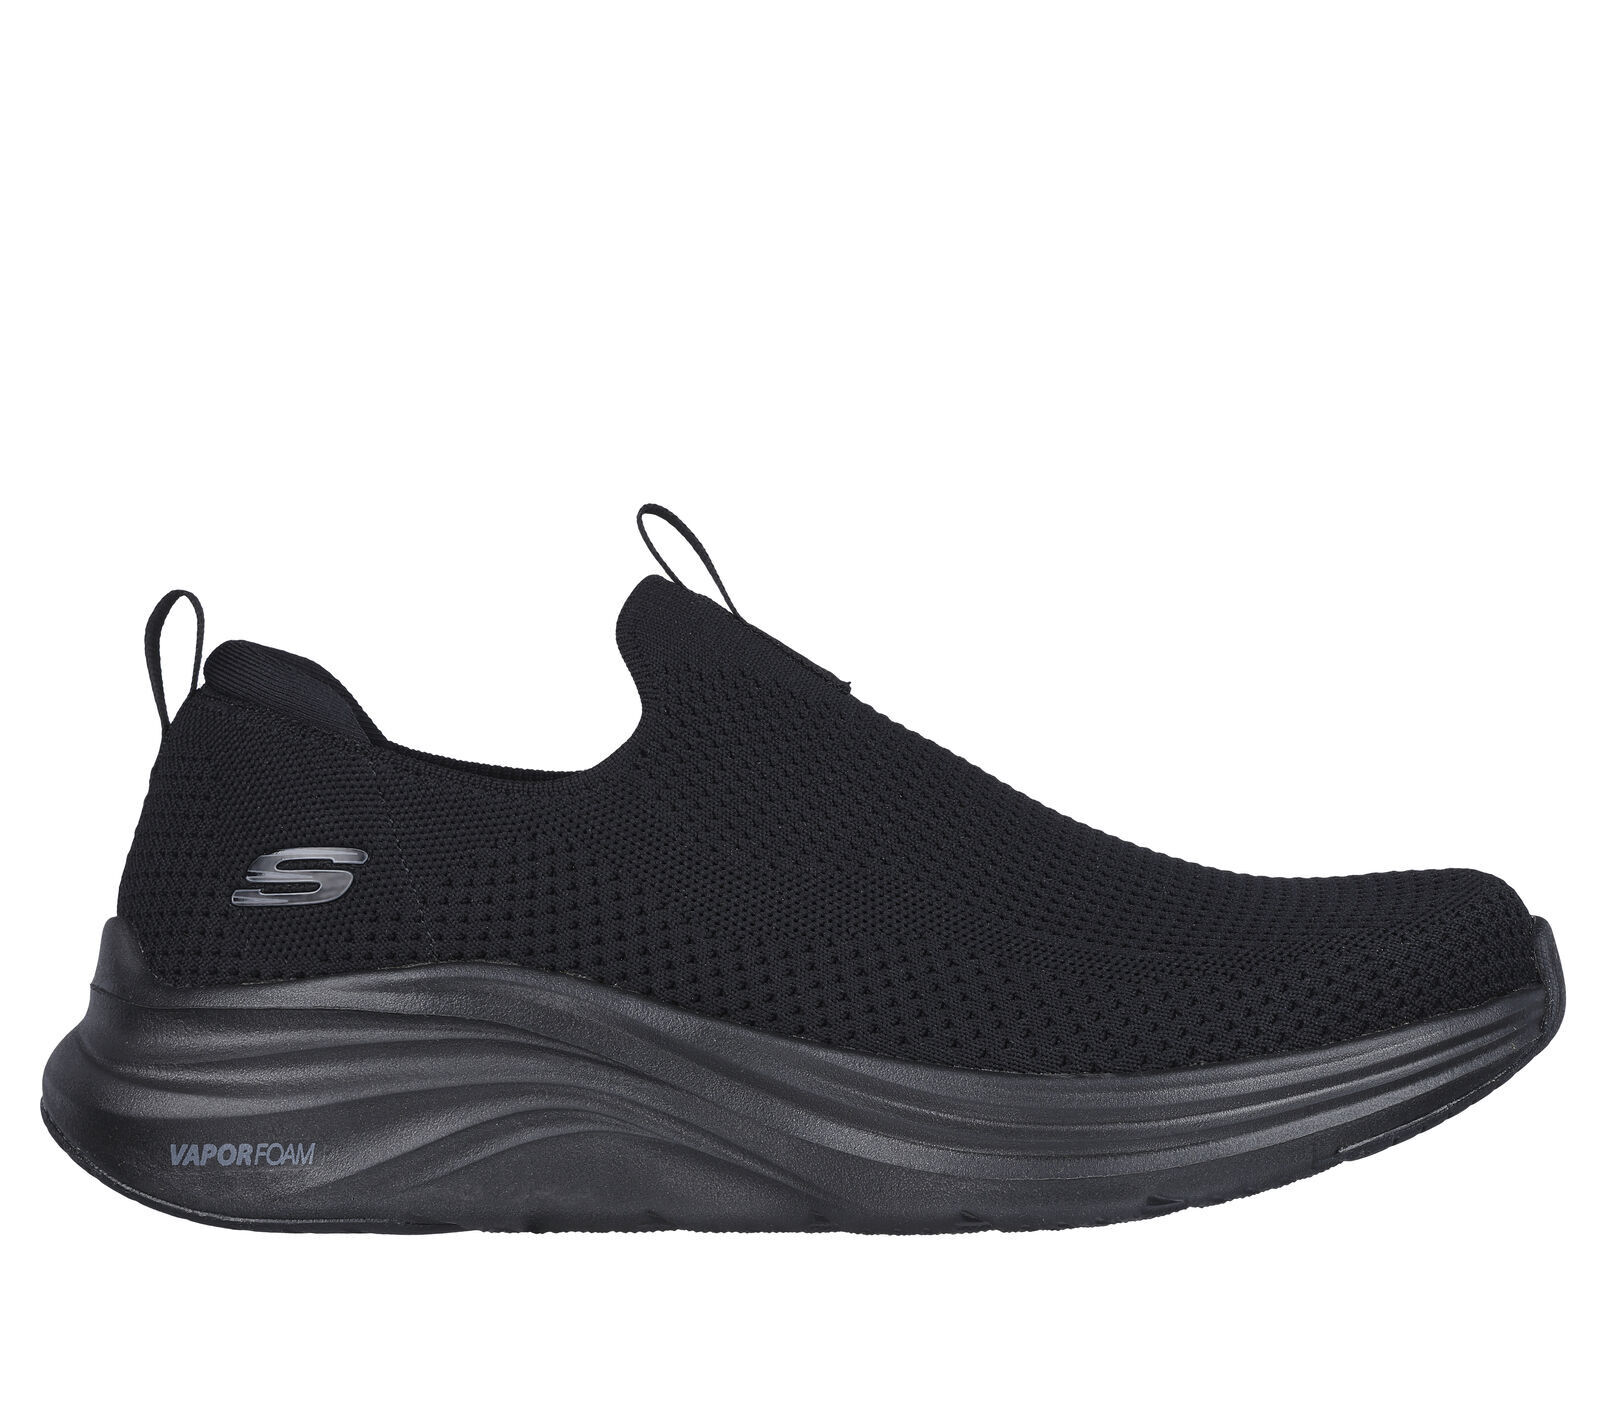 Skechers Vapor Foam - Covert - Chaussures lifestyle homme | Hardloop